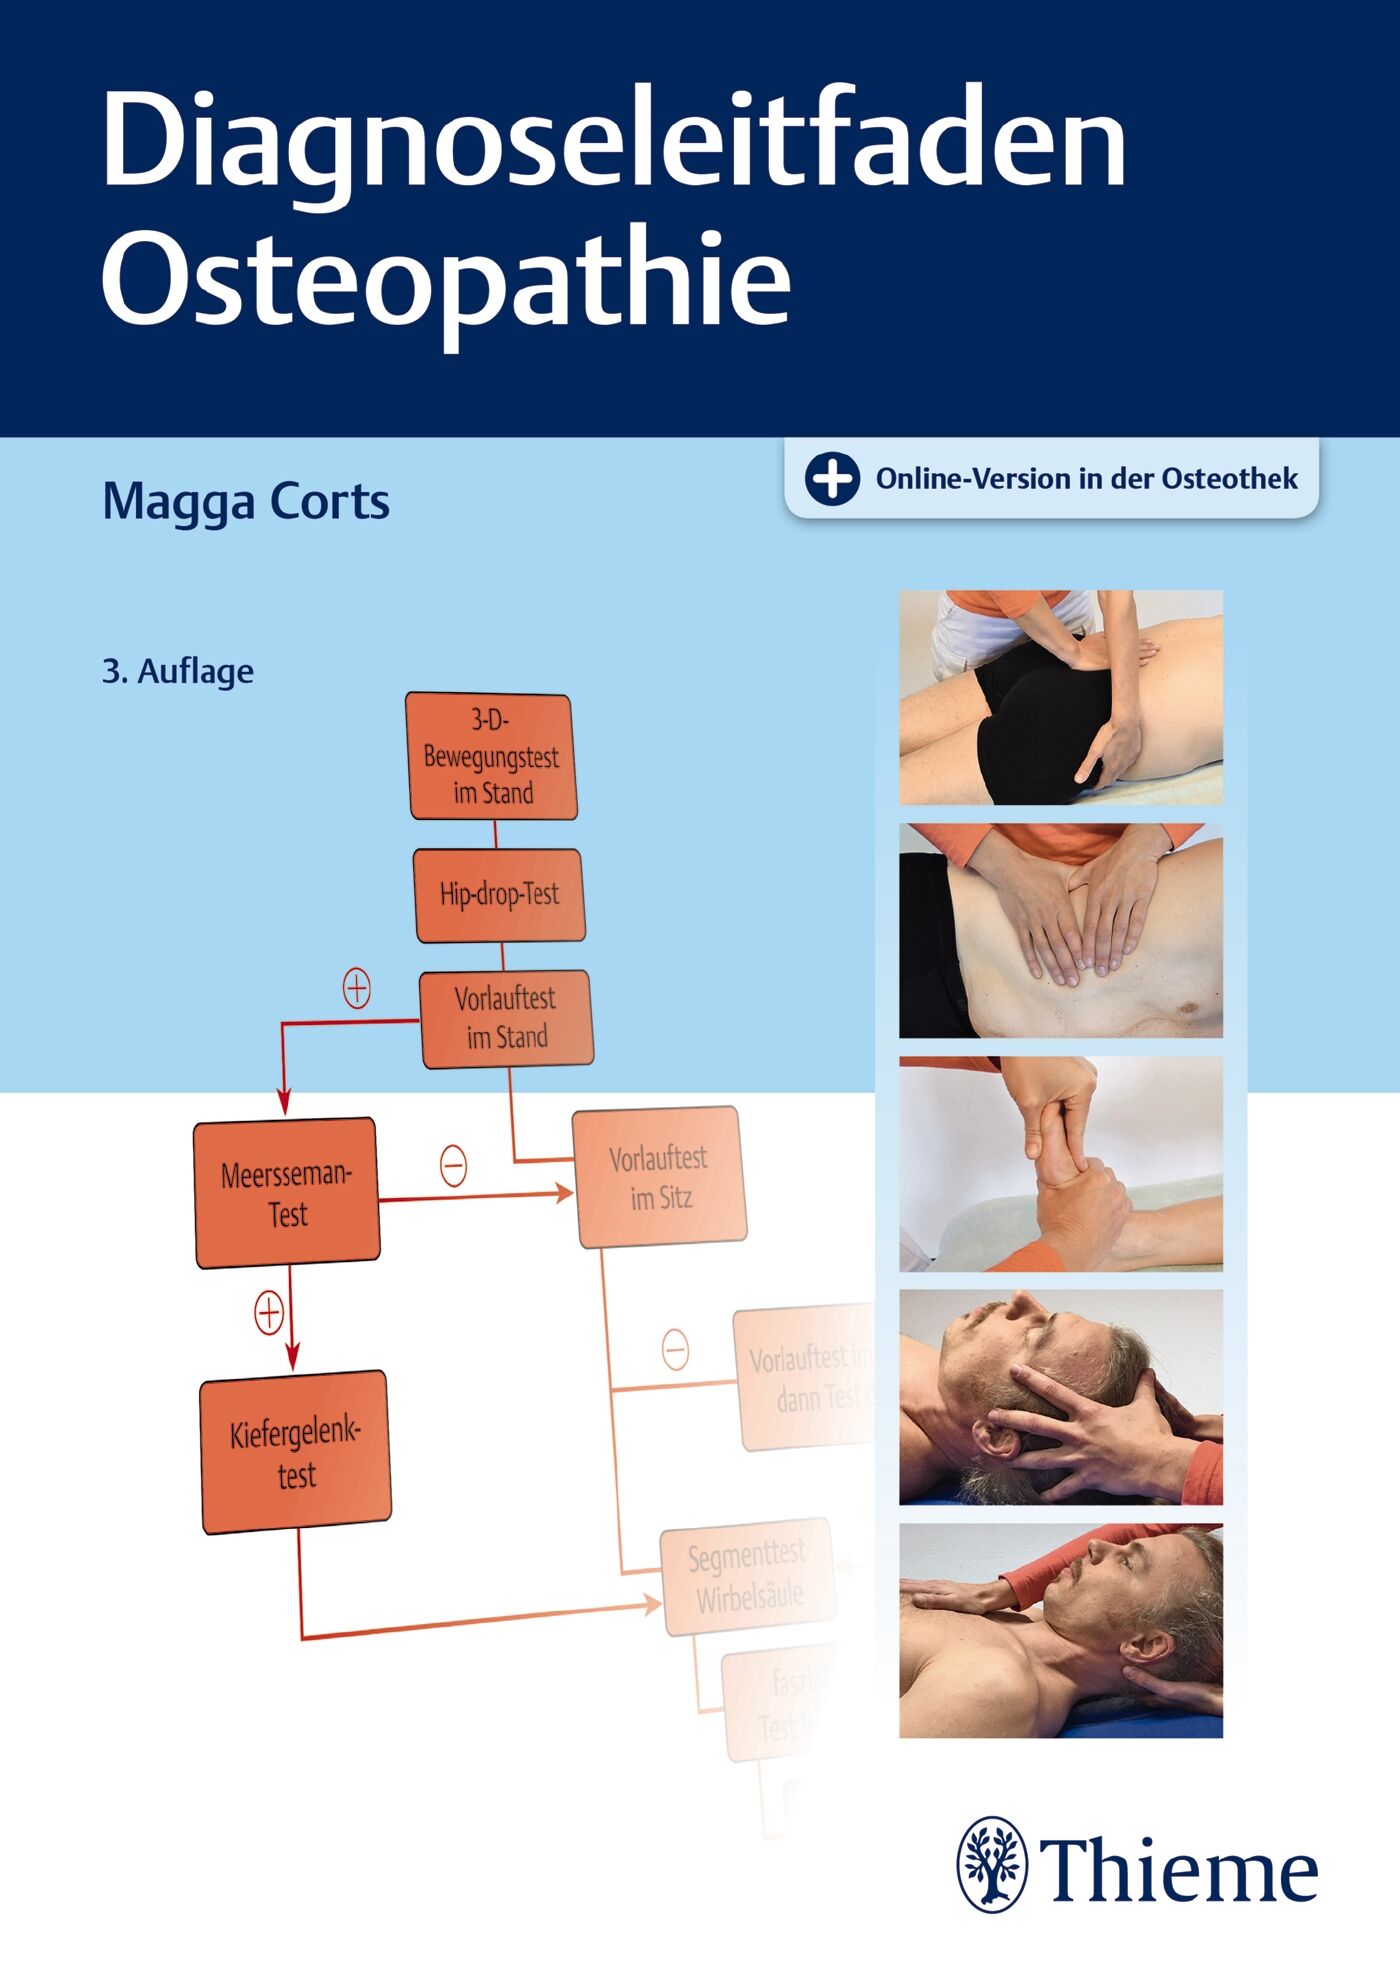 Diagnoseleitfaden Osteopathie, 9783132432307